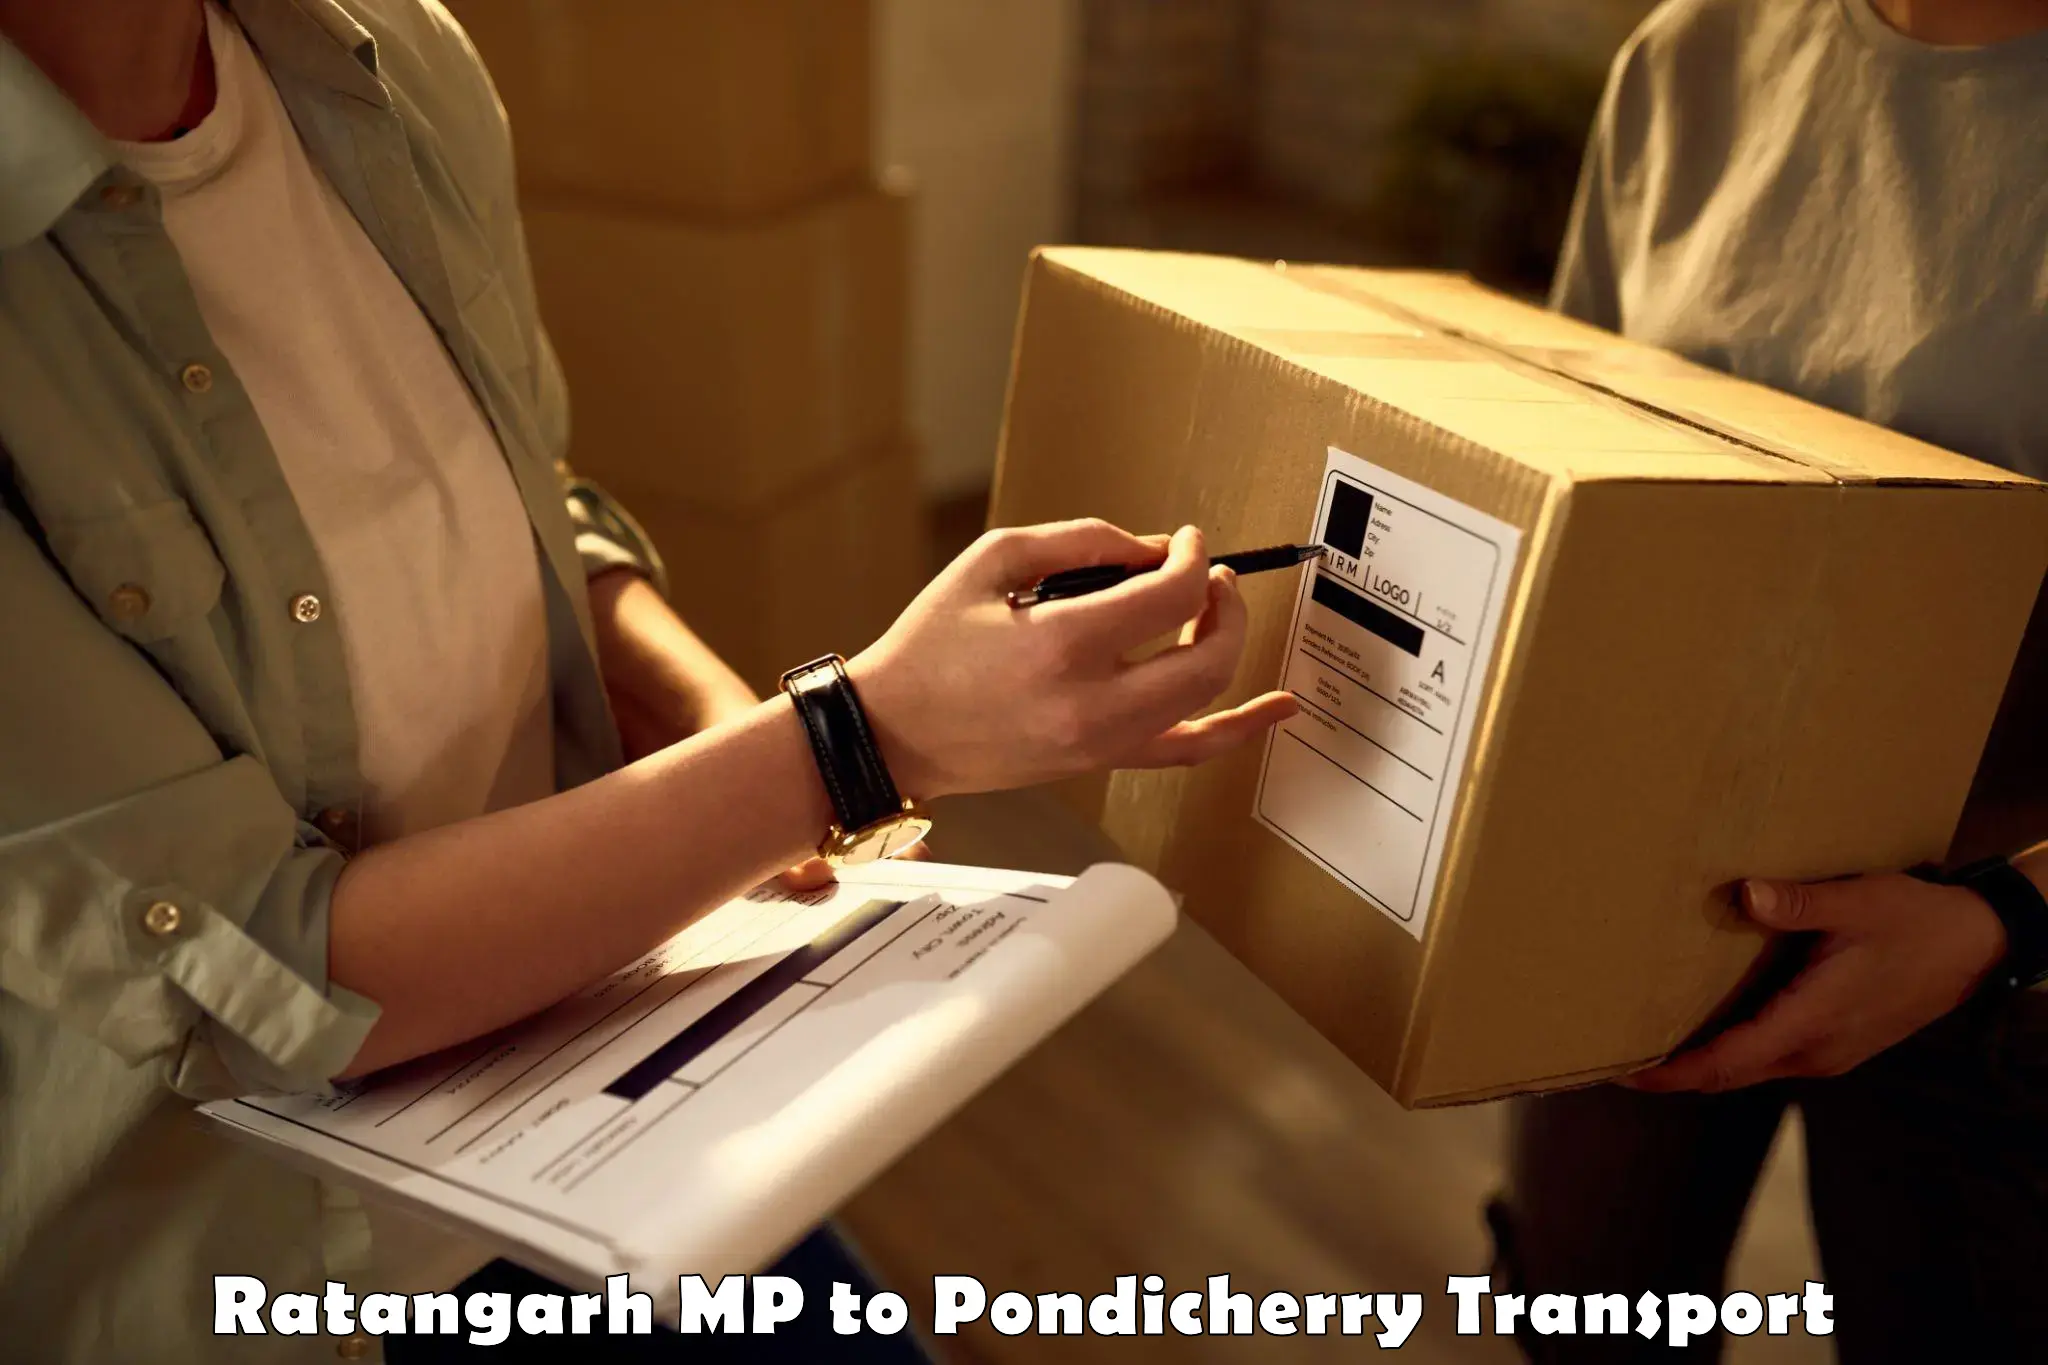 Furniture transport service Ratangarh MP to Pondicherry